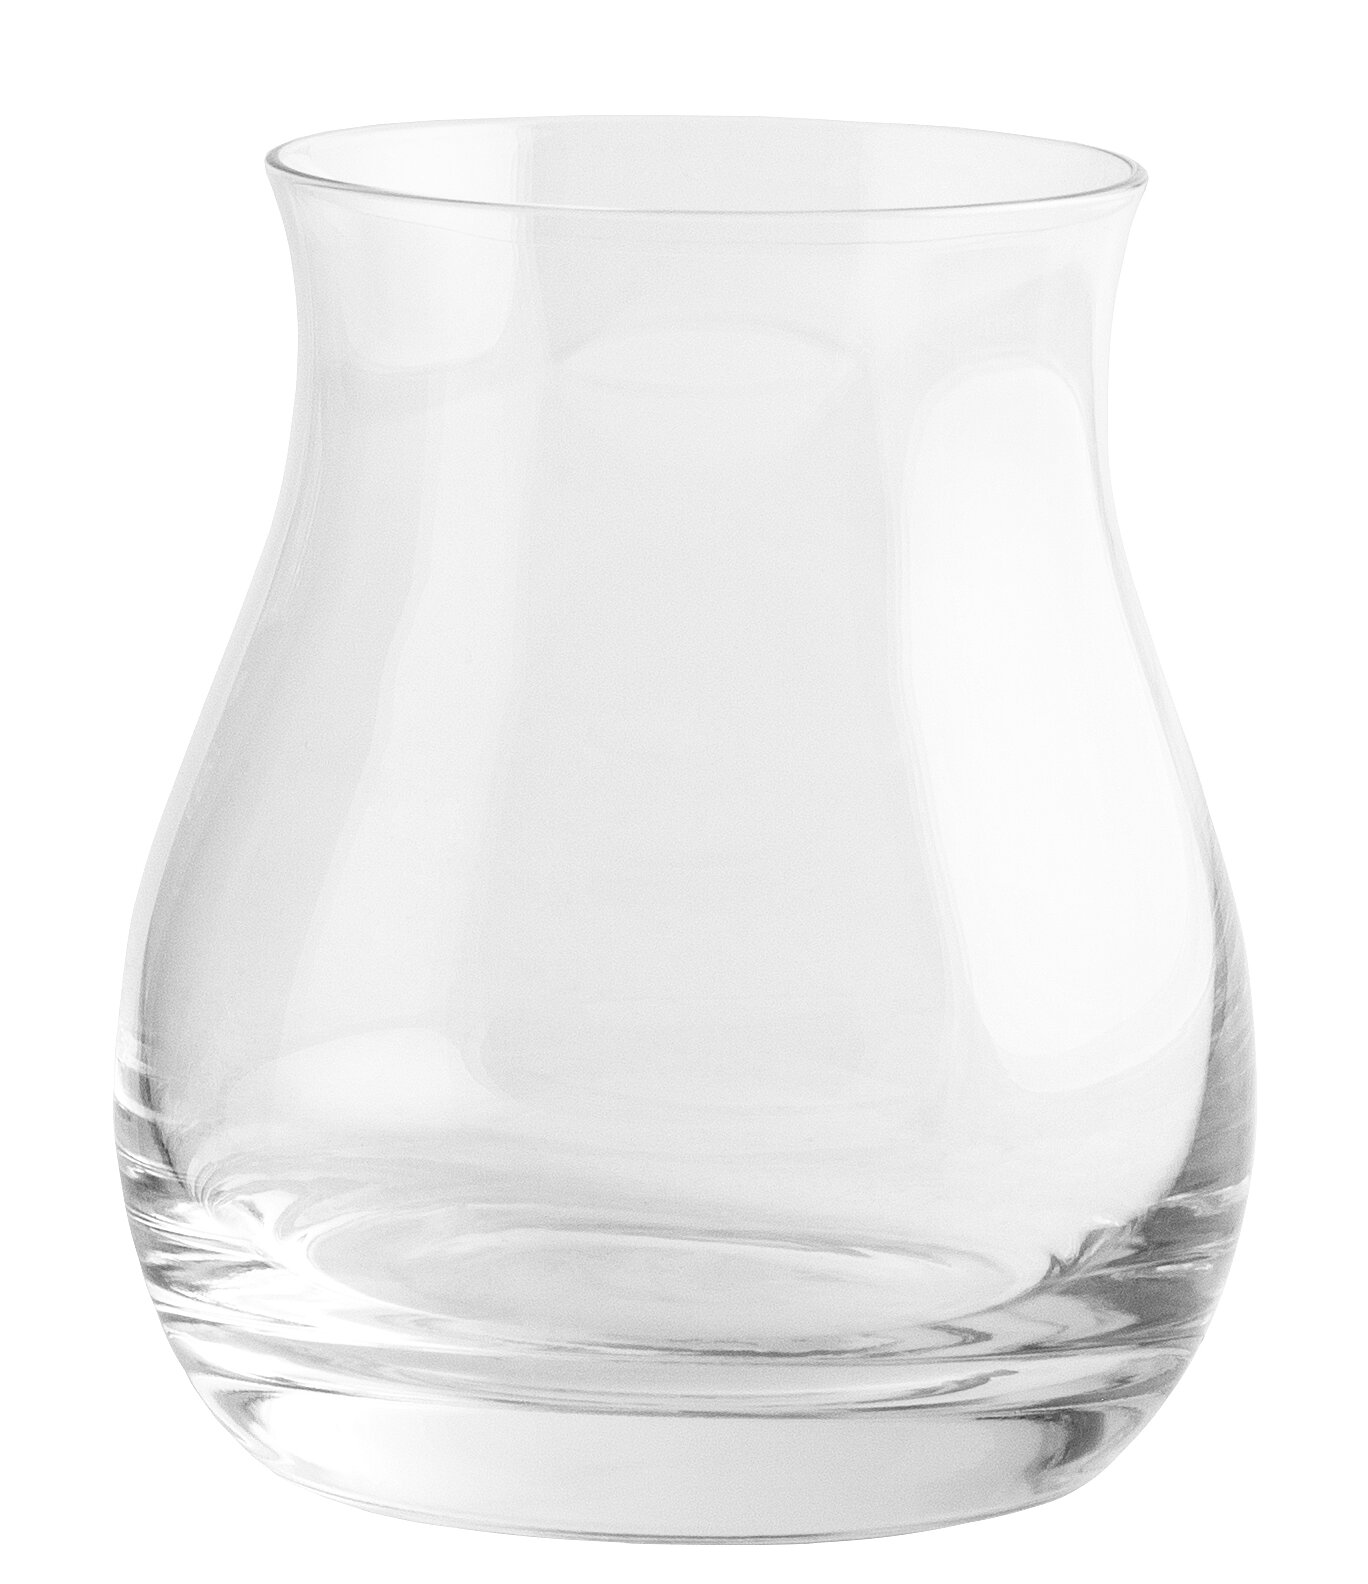 Spiegelau Willsberger Anniversary 4 - Piece 25.6oz. Lead Free Crystal  Whiskey Glass Stemware Set